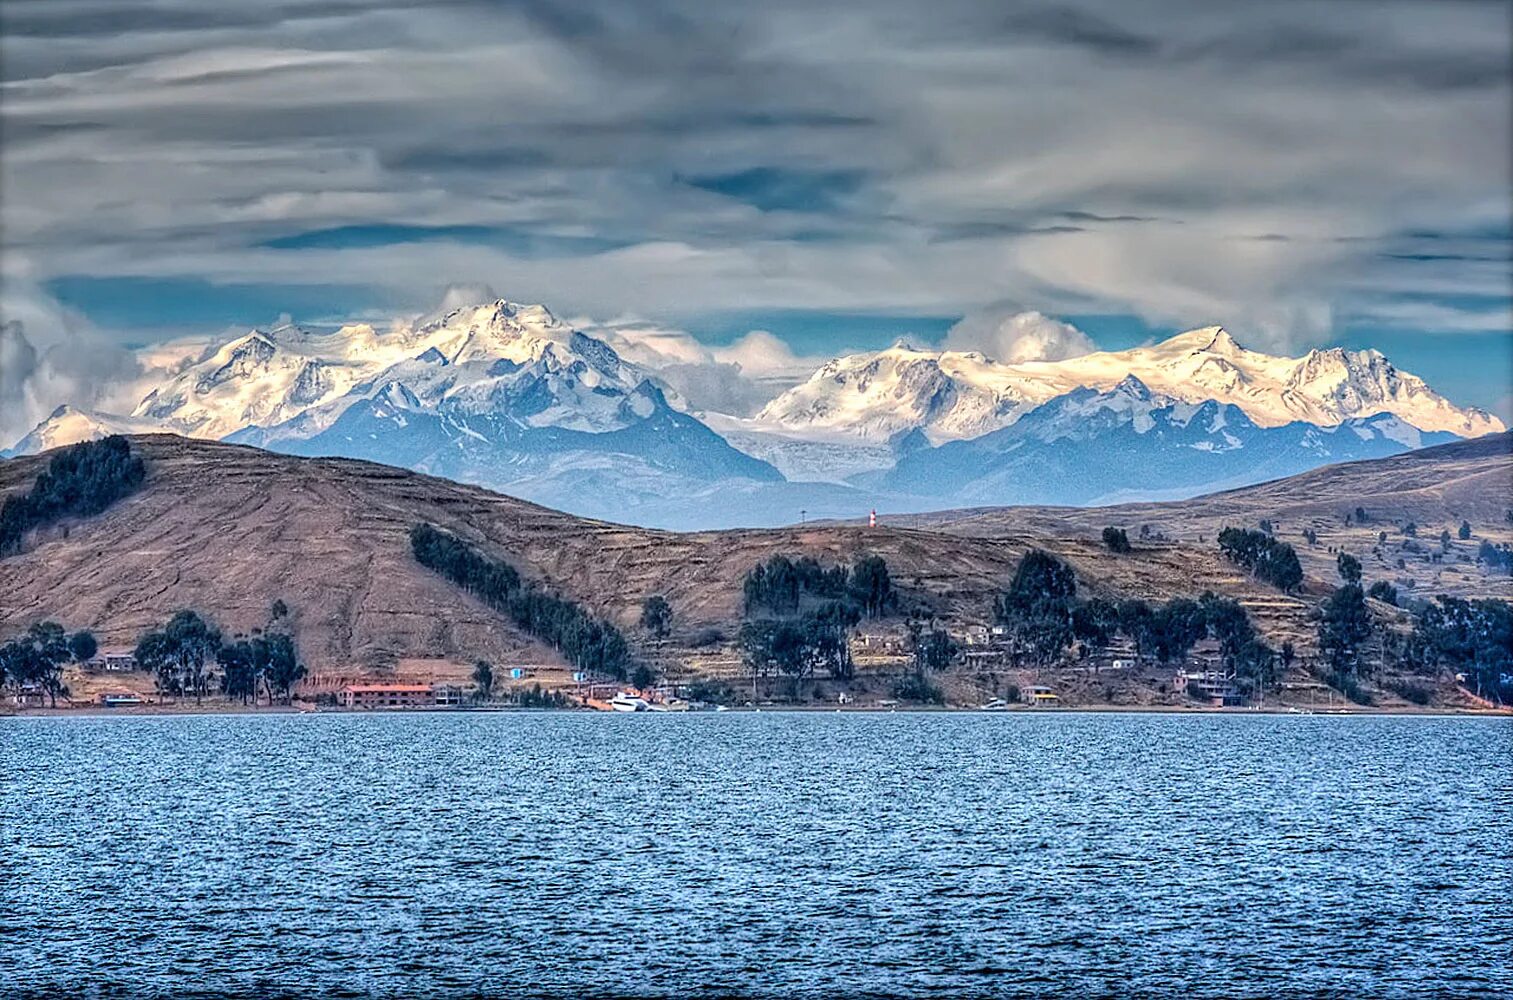 Озеро титикака в южной америке. Озеро Титикака Перу. Южная Америка озеро Титикака. Боливия озеро Титикака. Высокогорное озеро Перу.